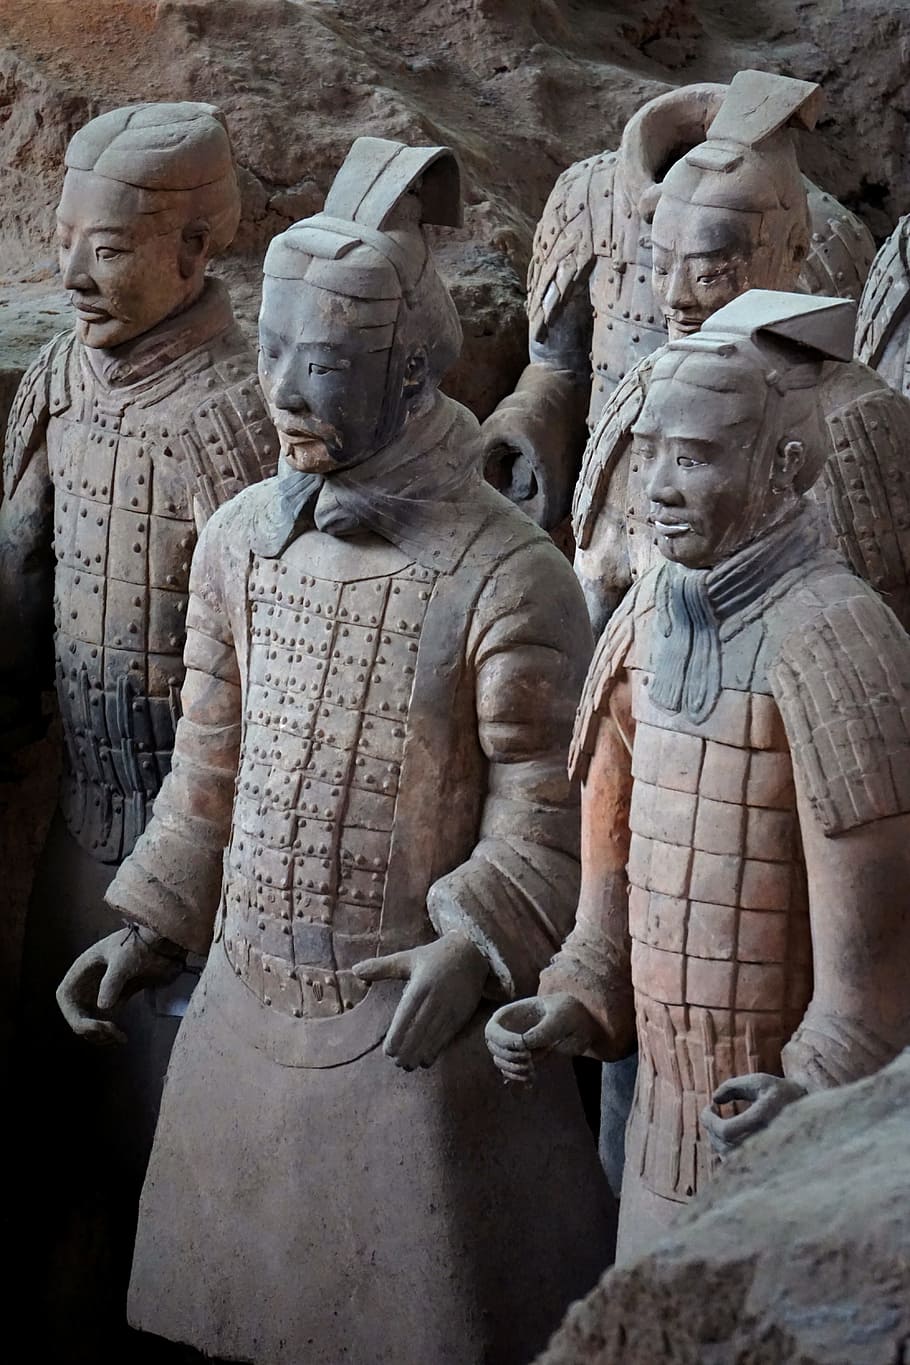 terracotta army, terracotta warriors, xi'an, china, sculpture